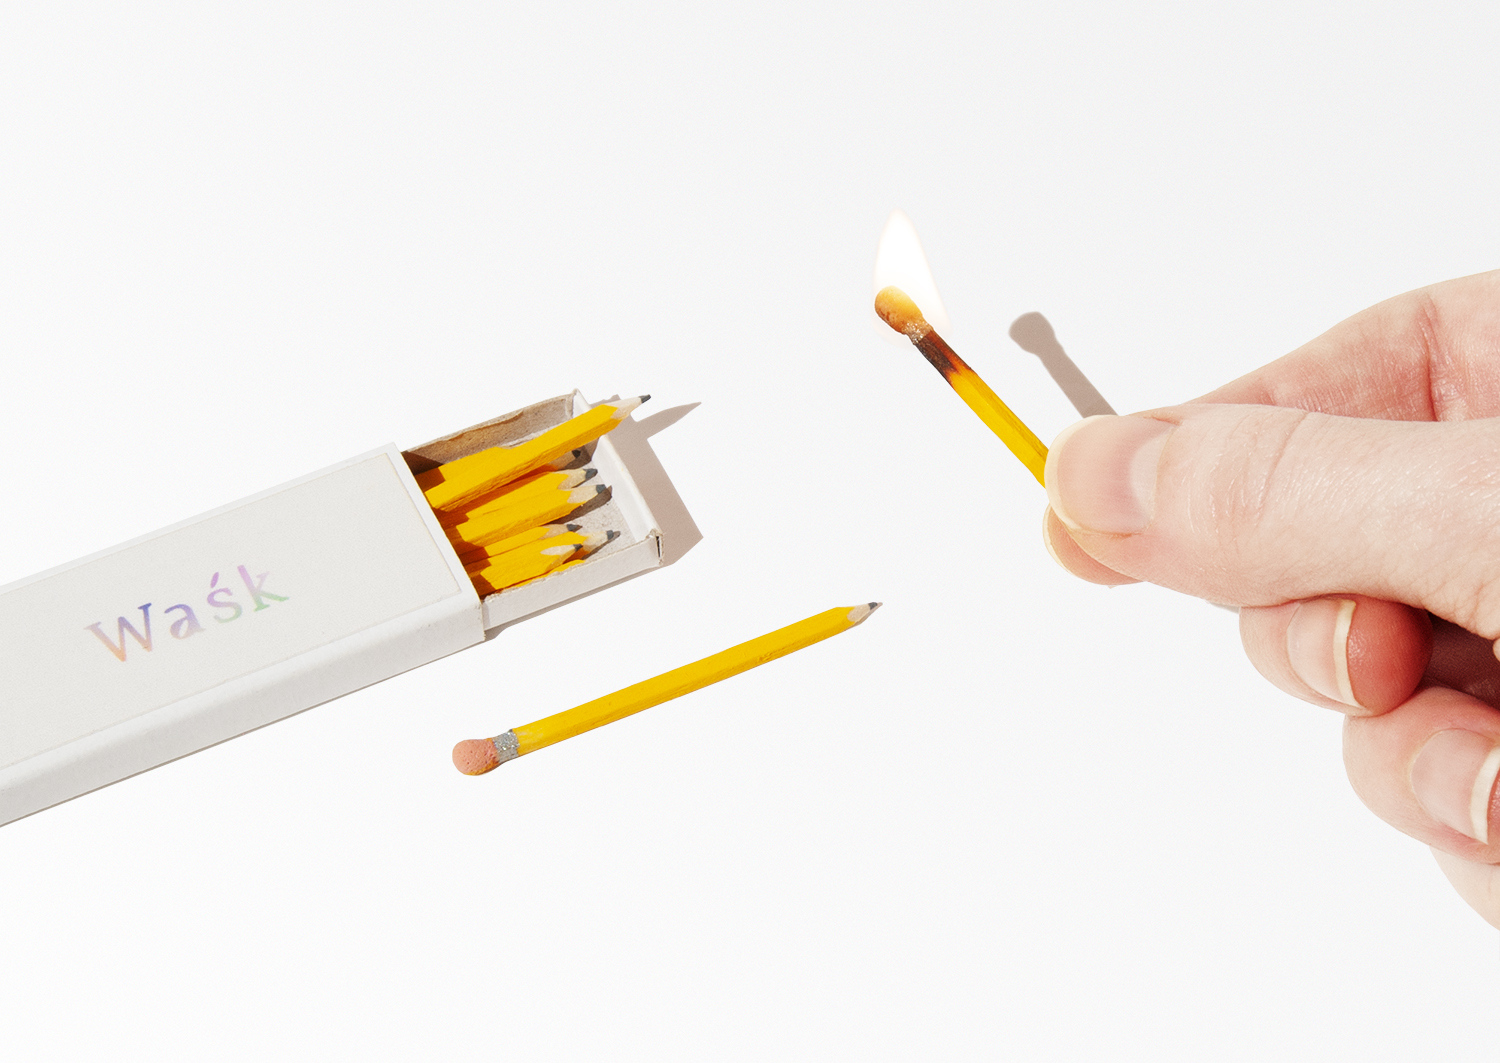 tiny lit match that looks like a pencil